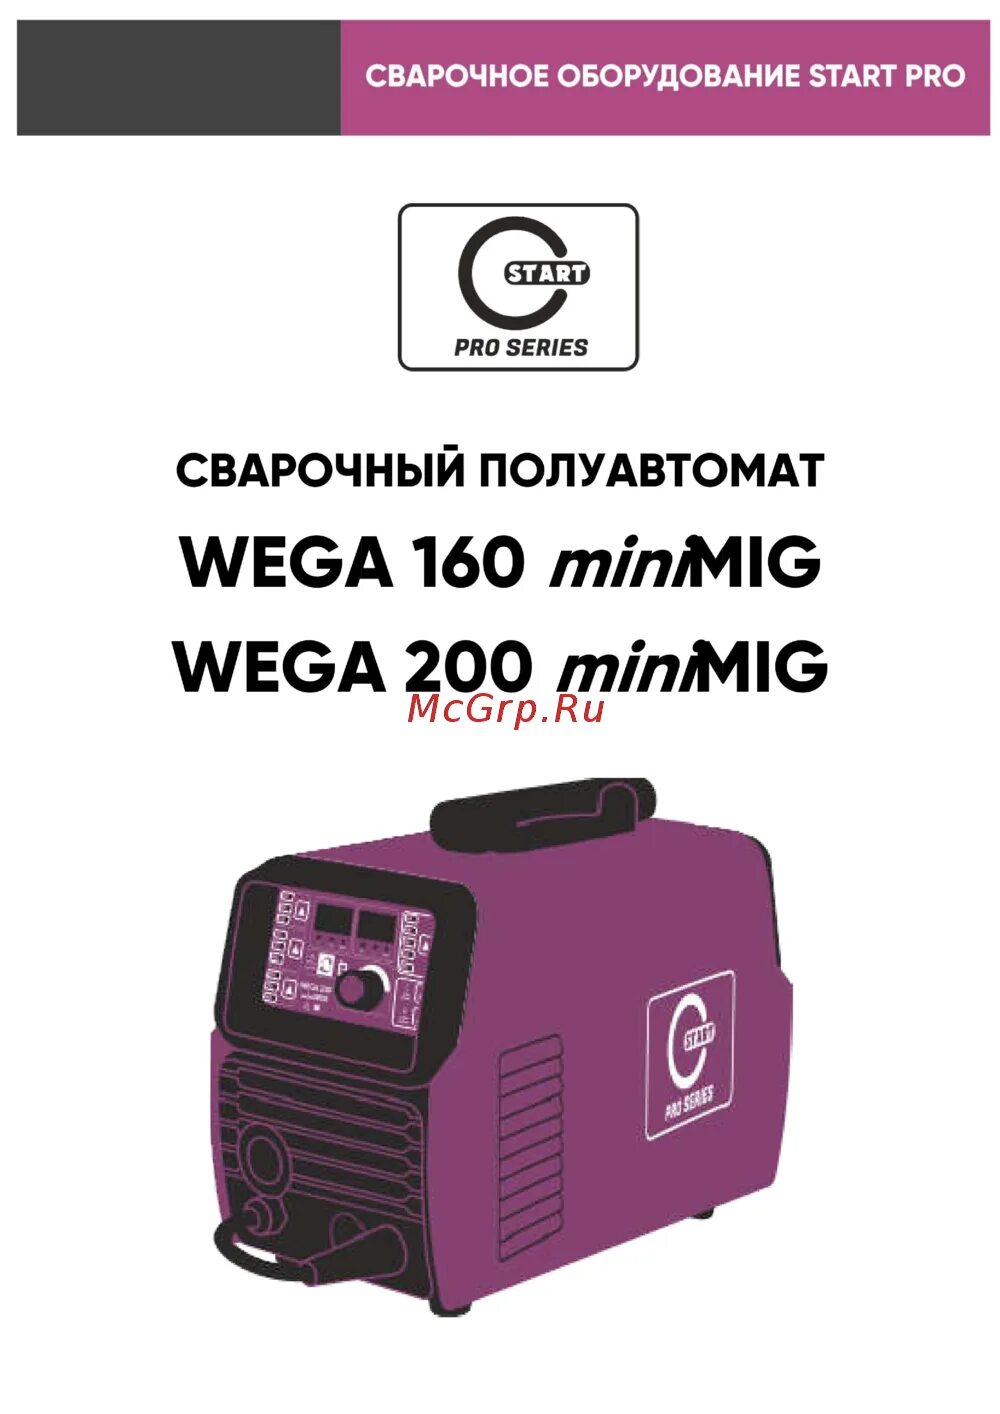 Wega 200 Minimig. Start Wega 200 Minimig. Полуавтомат Wega 200 Minimig start Pro Series. Start Minimig 200 сварочный полуавтомат 2w202.